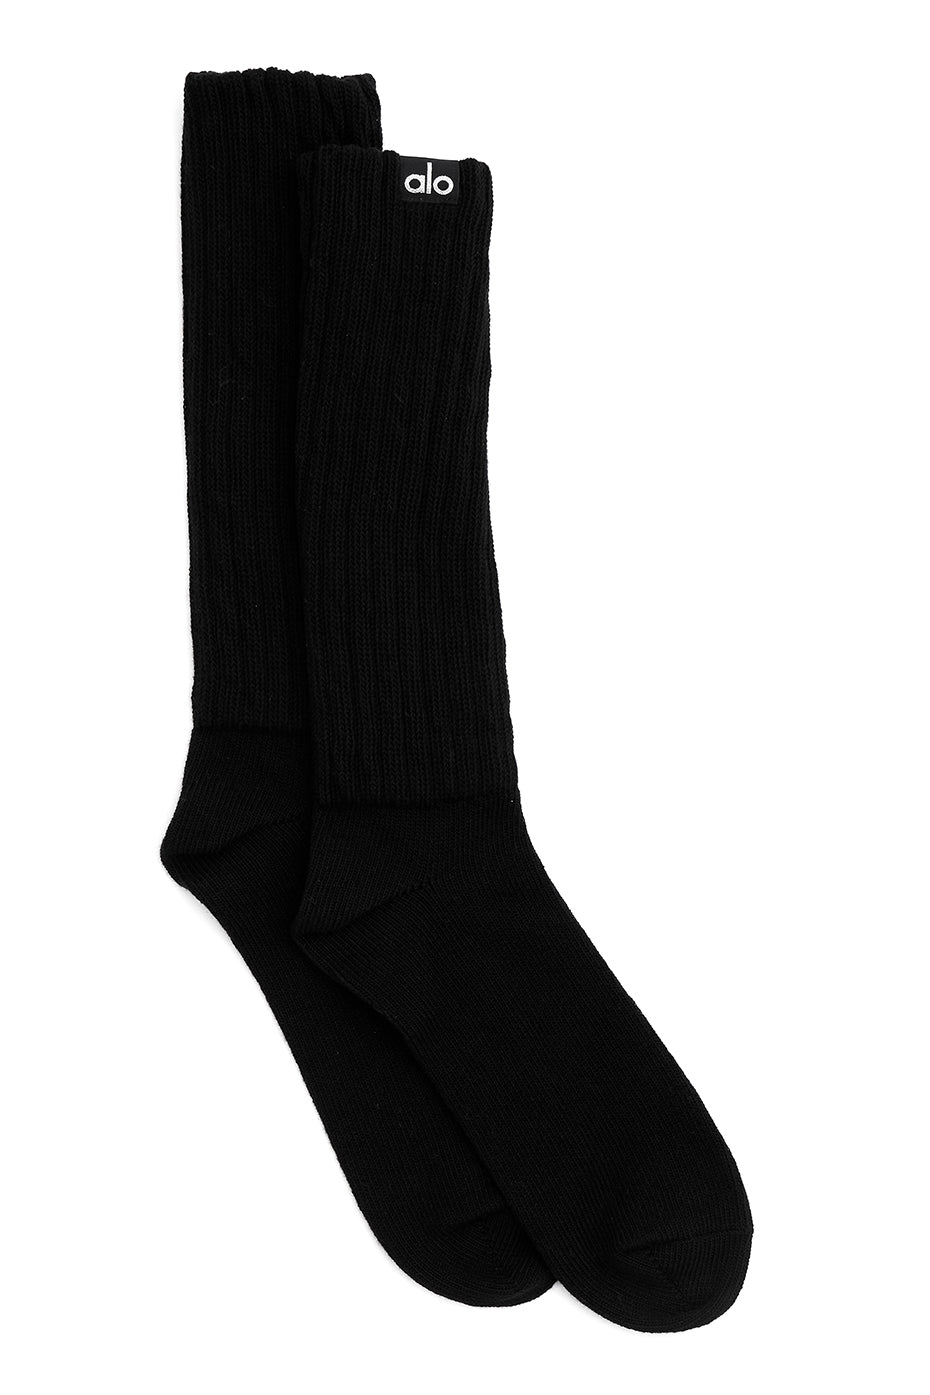 Alo Yoga Cashmere Jet Set Socks  Womens cashmere, Cashmere socks, Socks